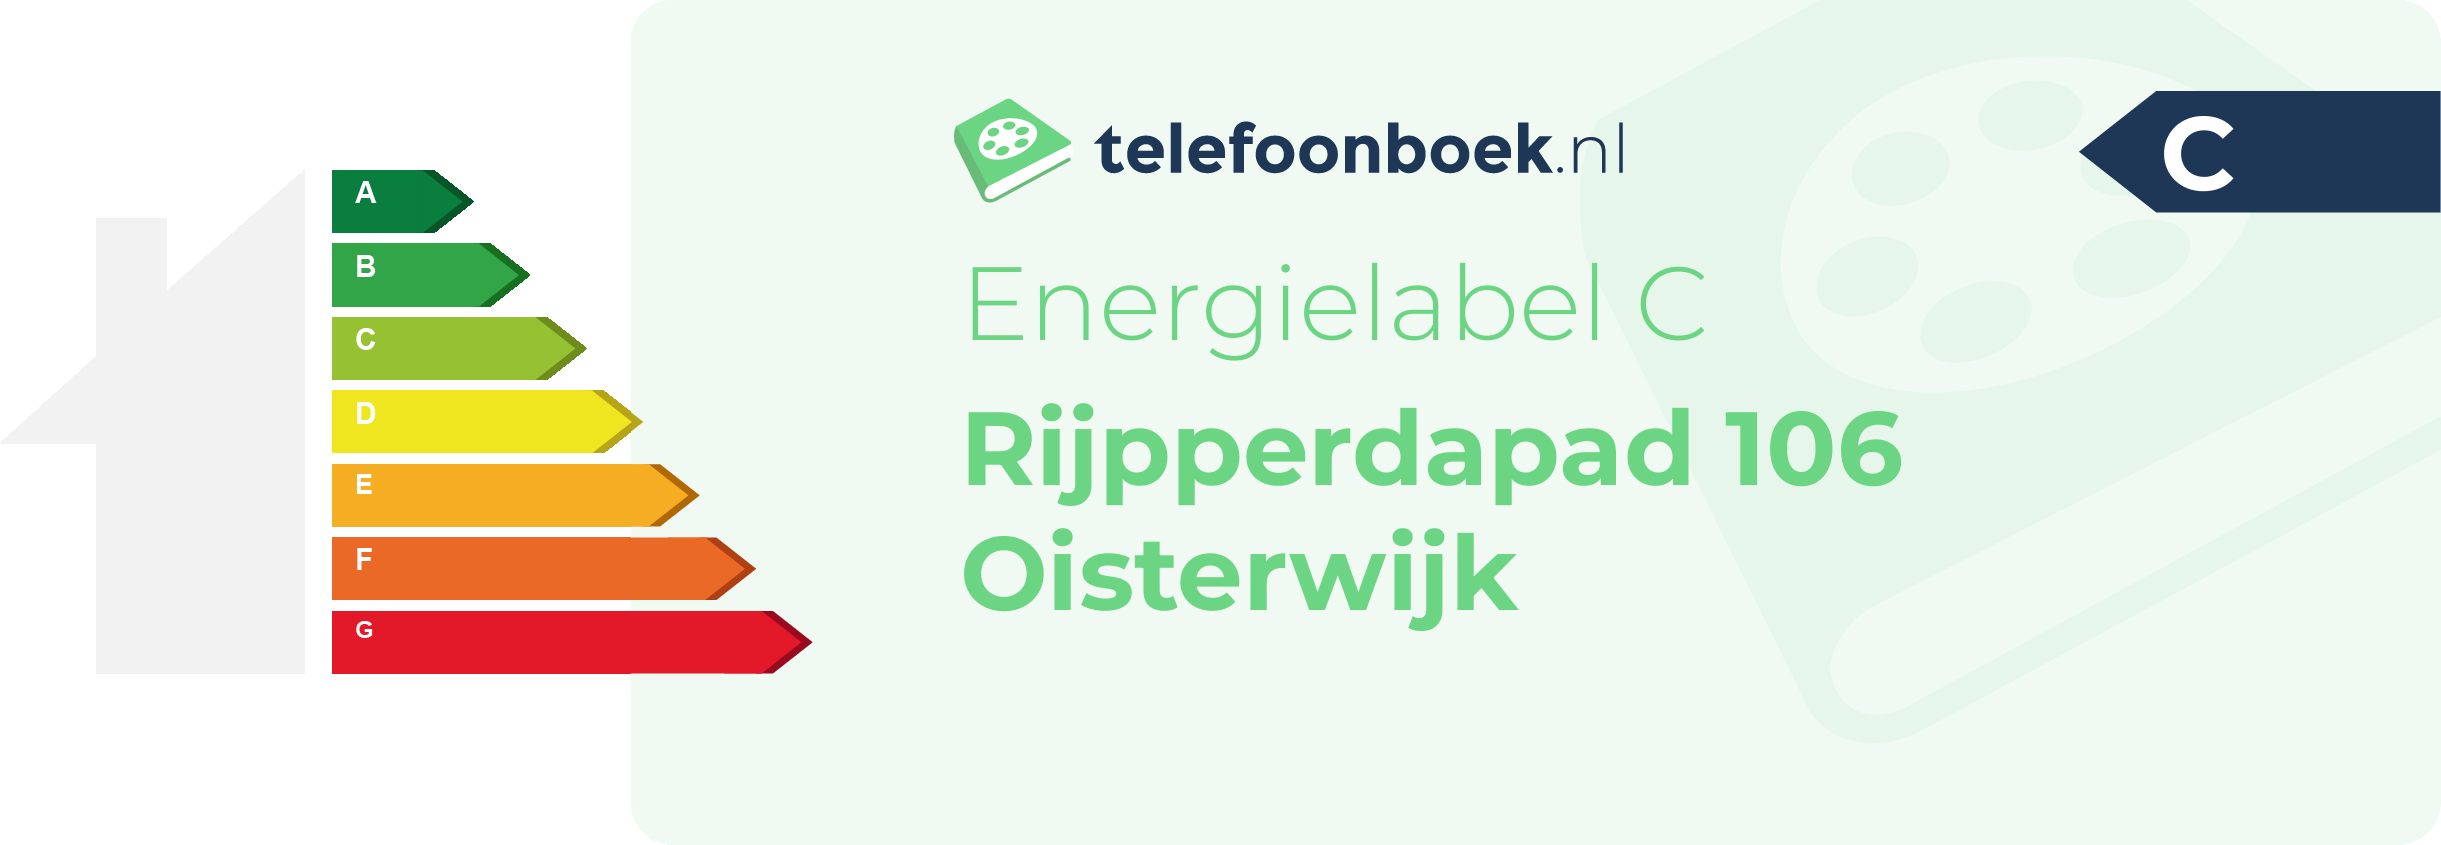 Energielabel Rijpperdapad 106 Oisterwijk